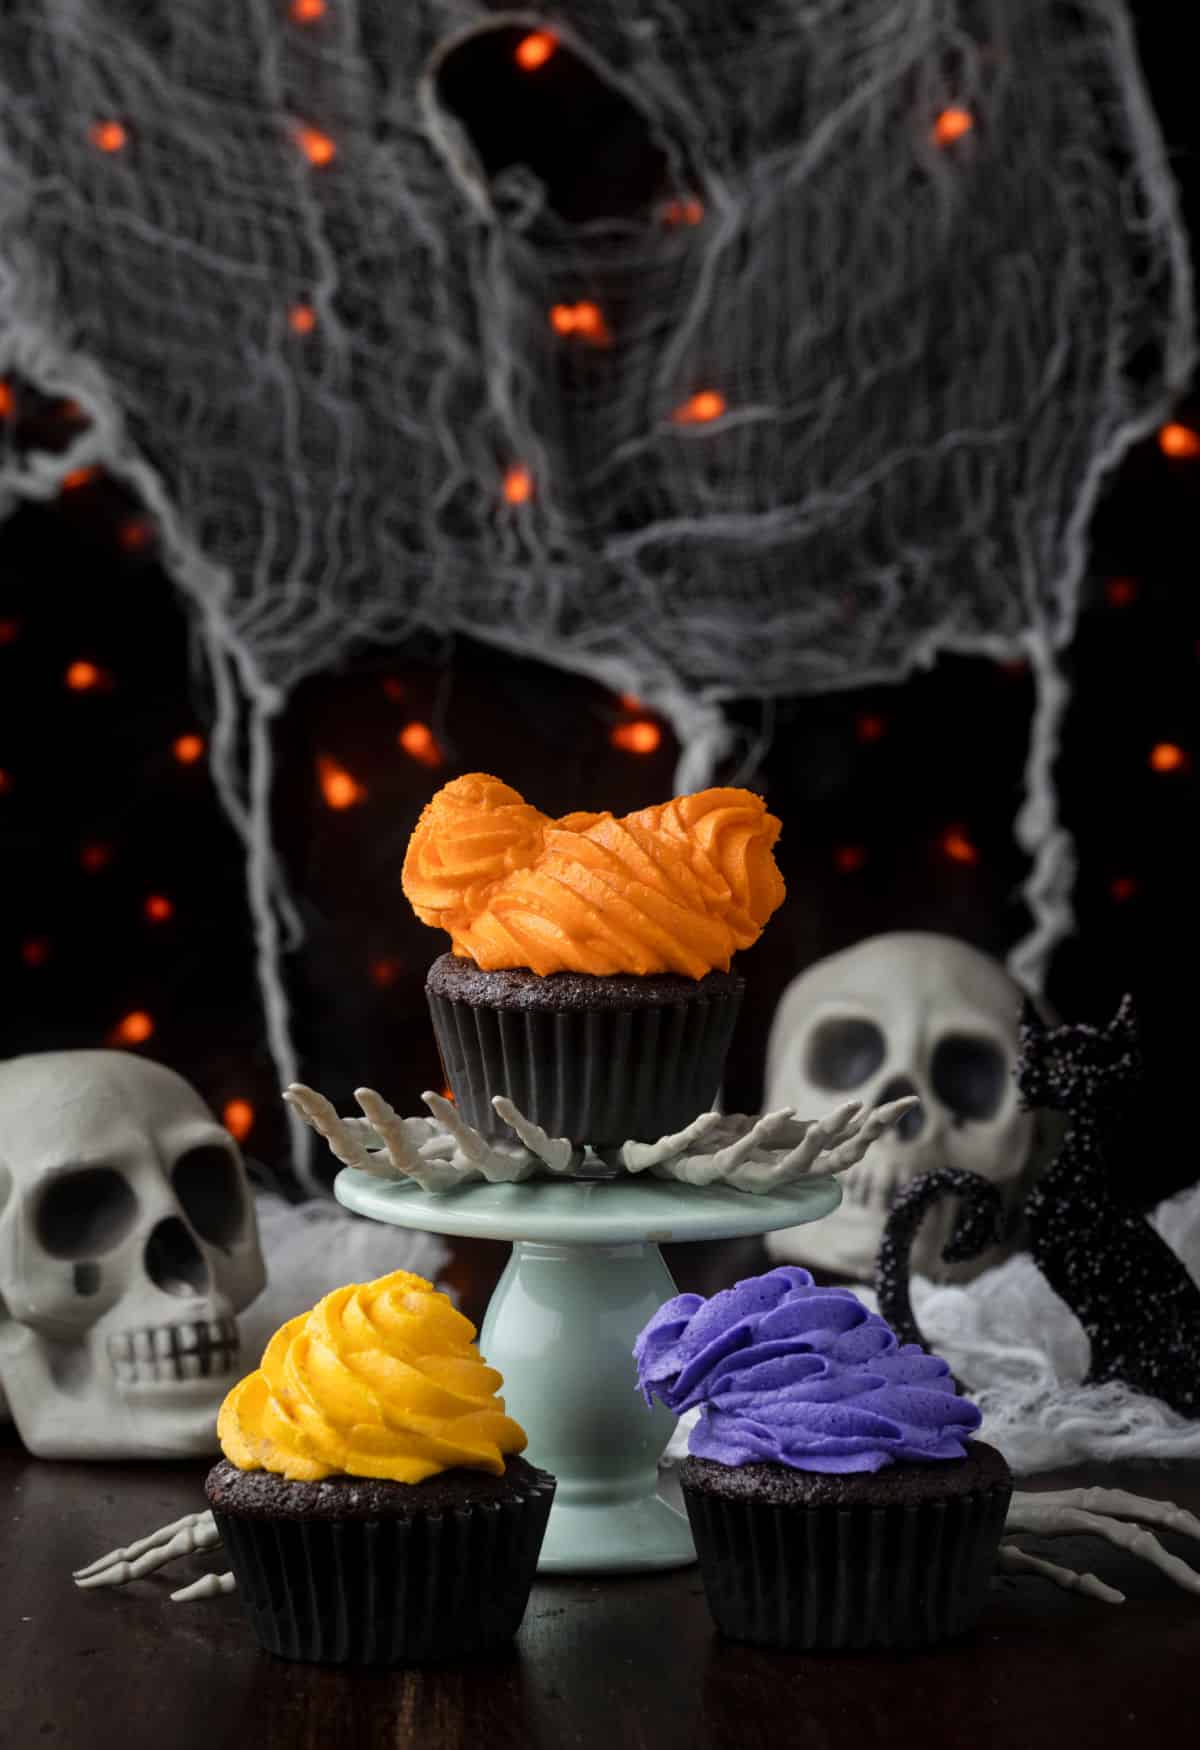 Three hocus pocus cupcakes by plastic skulls and spider webs. 